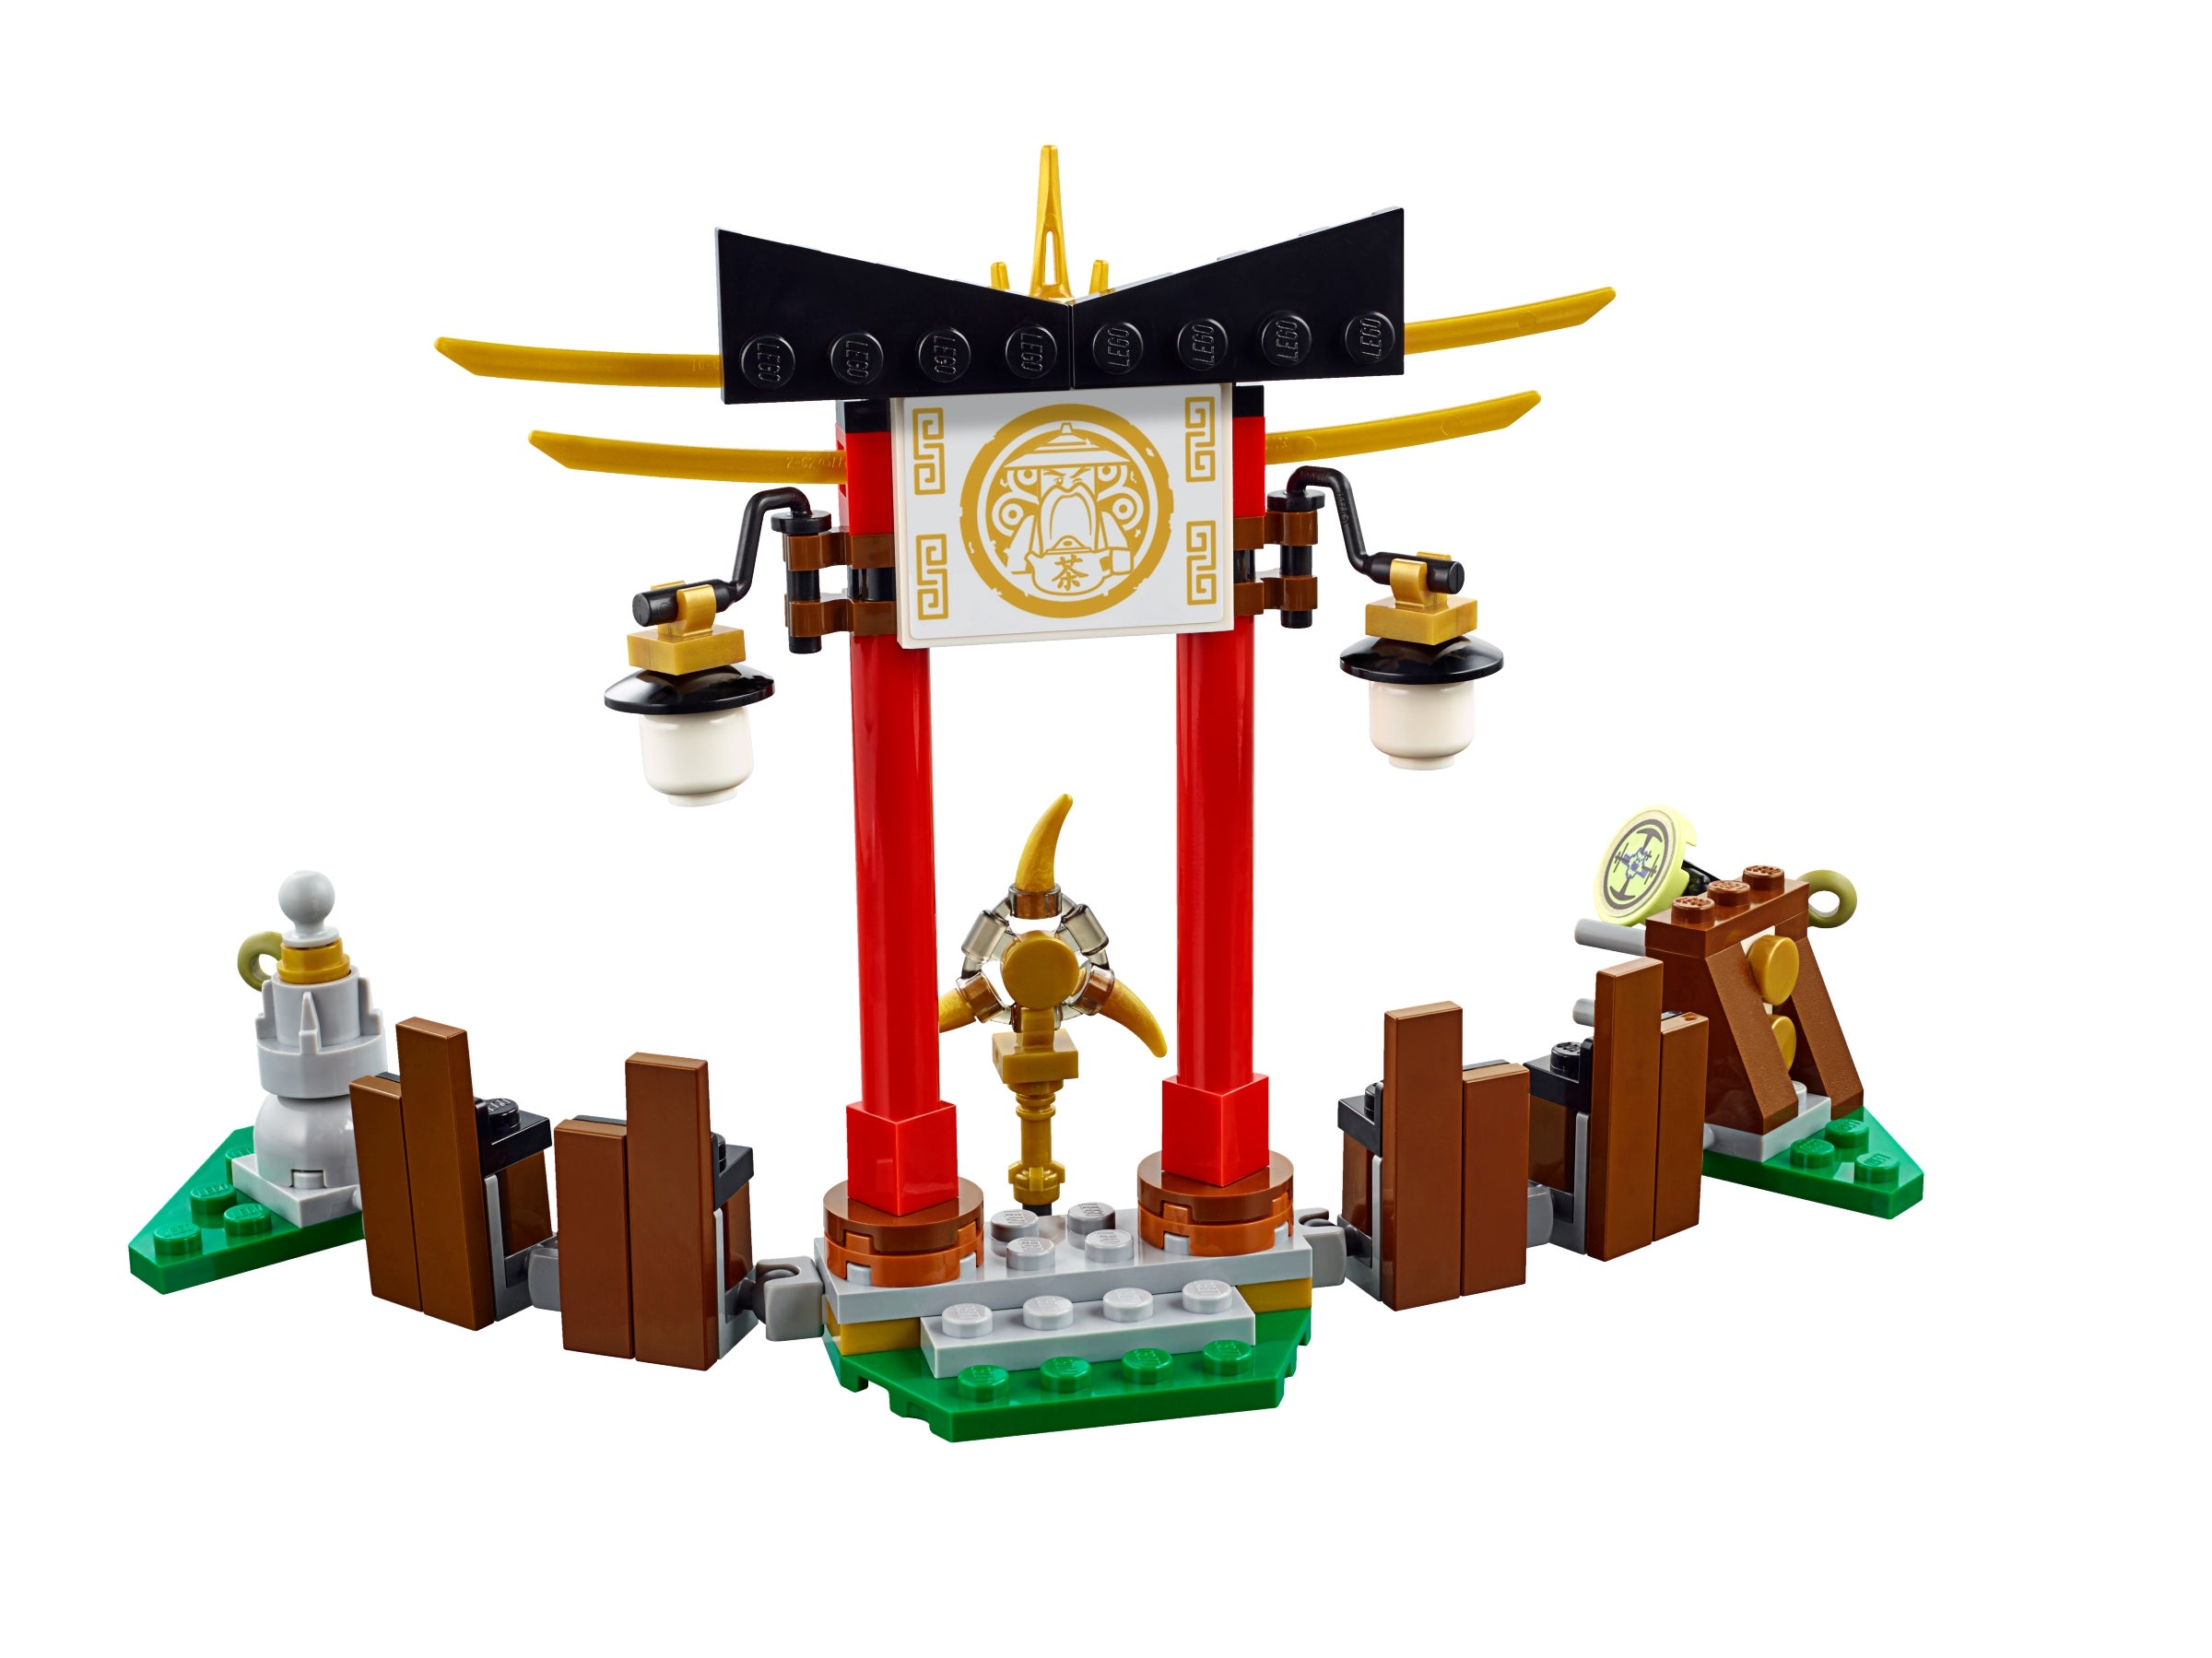 100% Original Lego Ninjago Minifigura Wu Set 70734 Nuevo